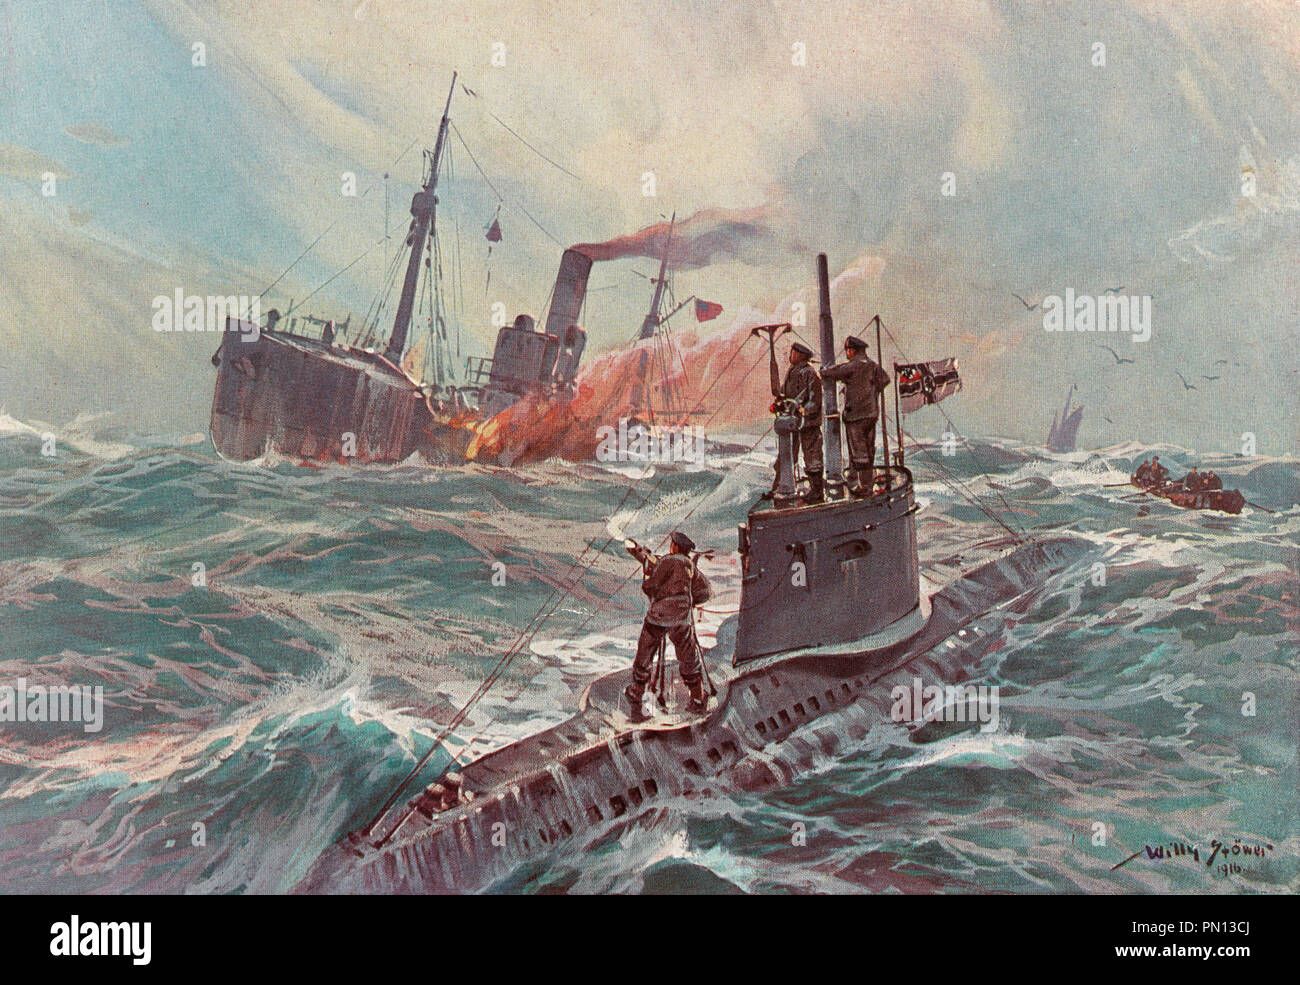 Le sous-marin allemand attaquant un navire marchand anglais, illustration 1916 Banque D'Images